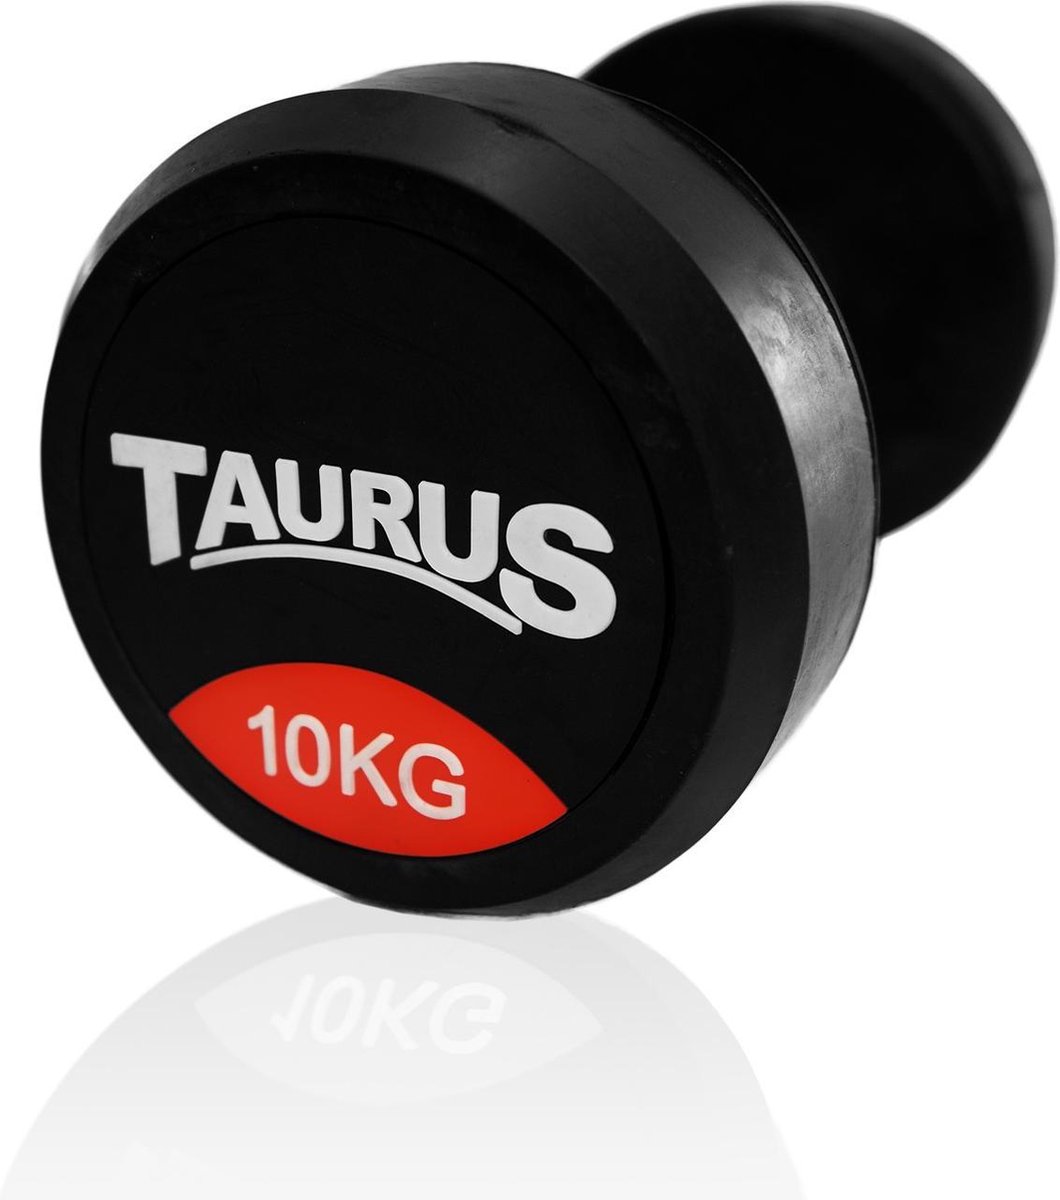 Taurus halter gerubberd - Dumbbell 20 kg